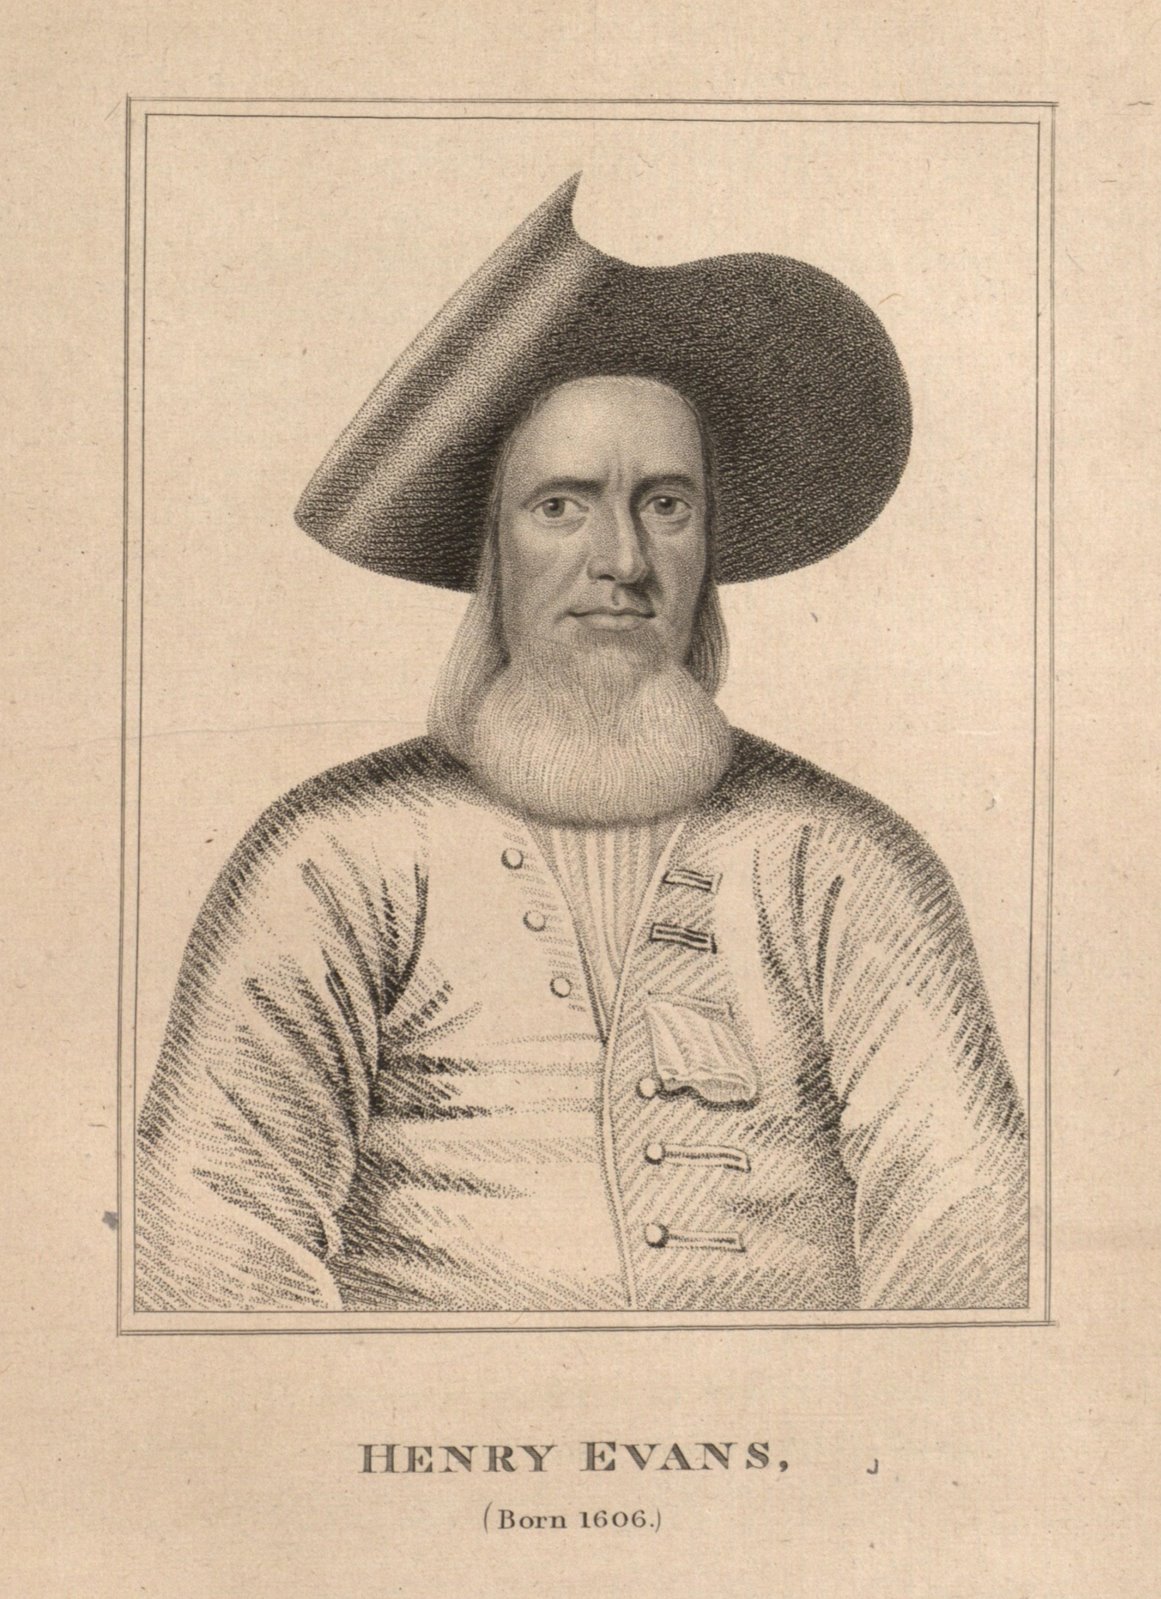 Henry Evans, born 1606